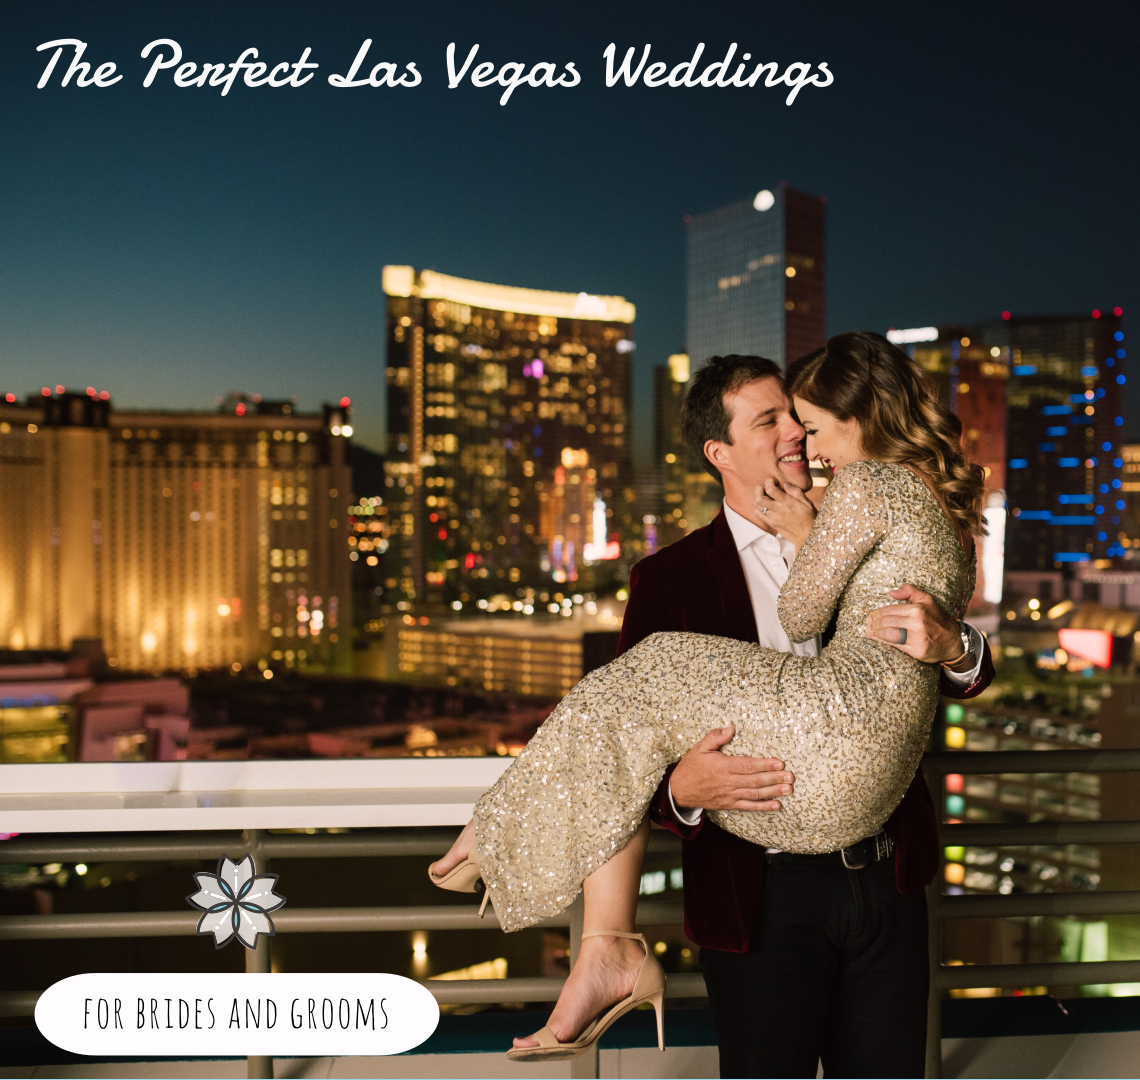 How to Plan the Perfect Las Vegas Wedding?